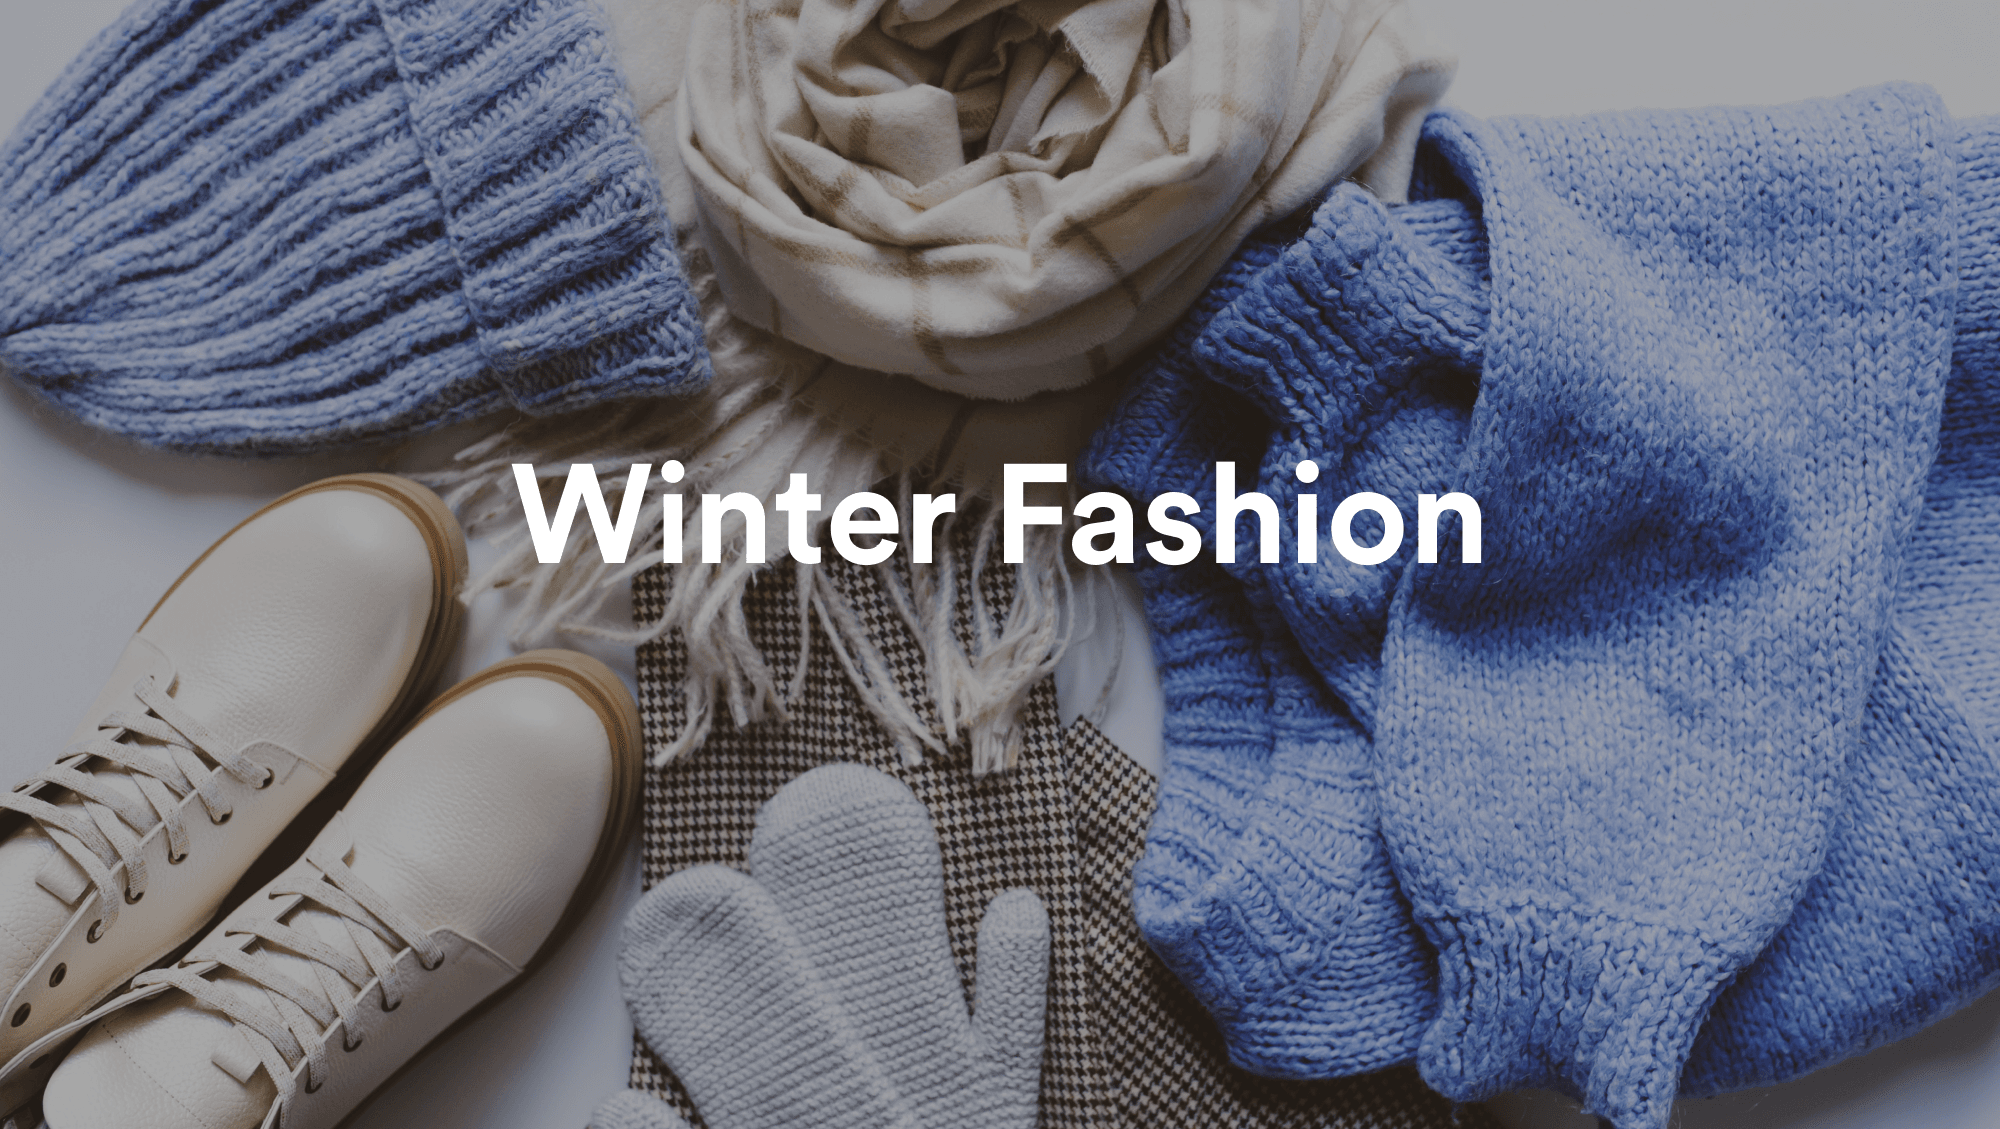 Winter Fashion - Shop Categories.png